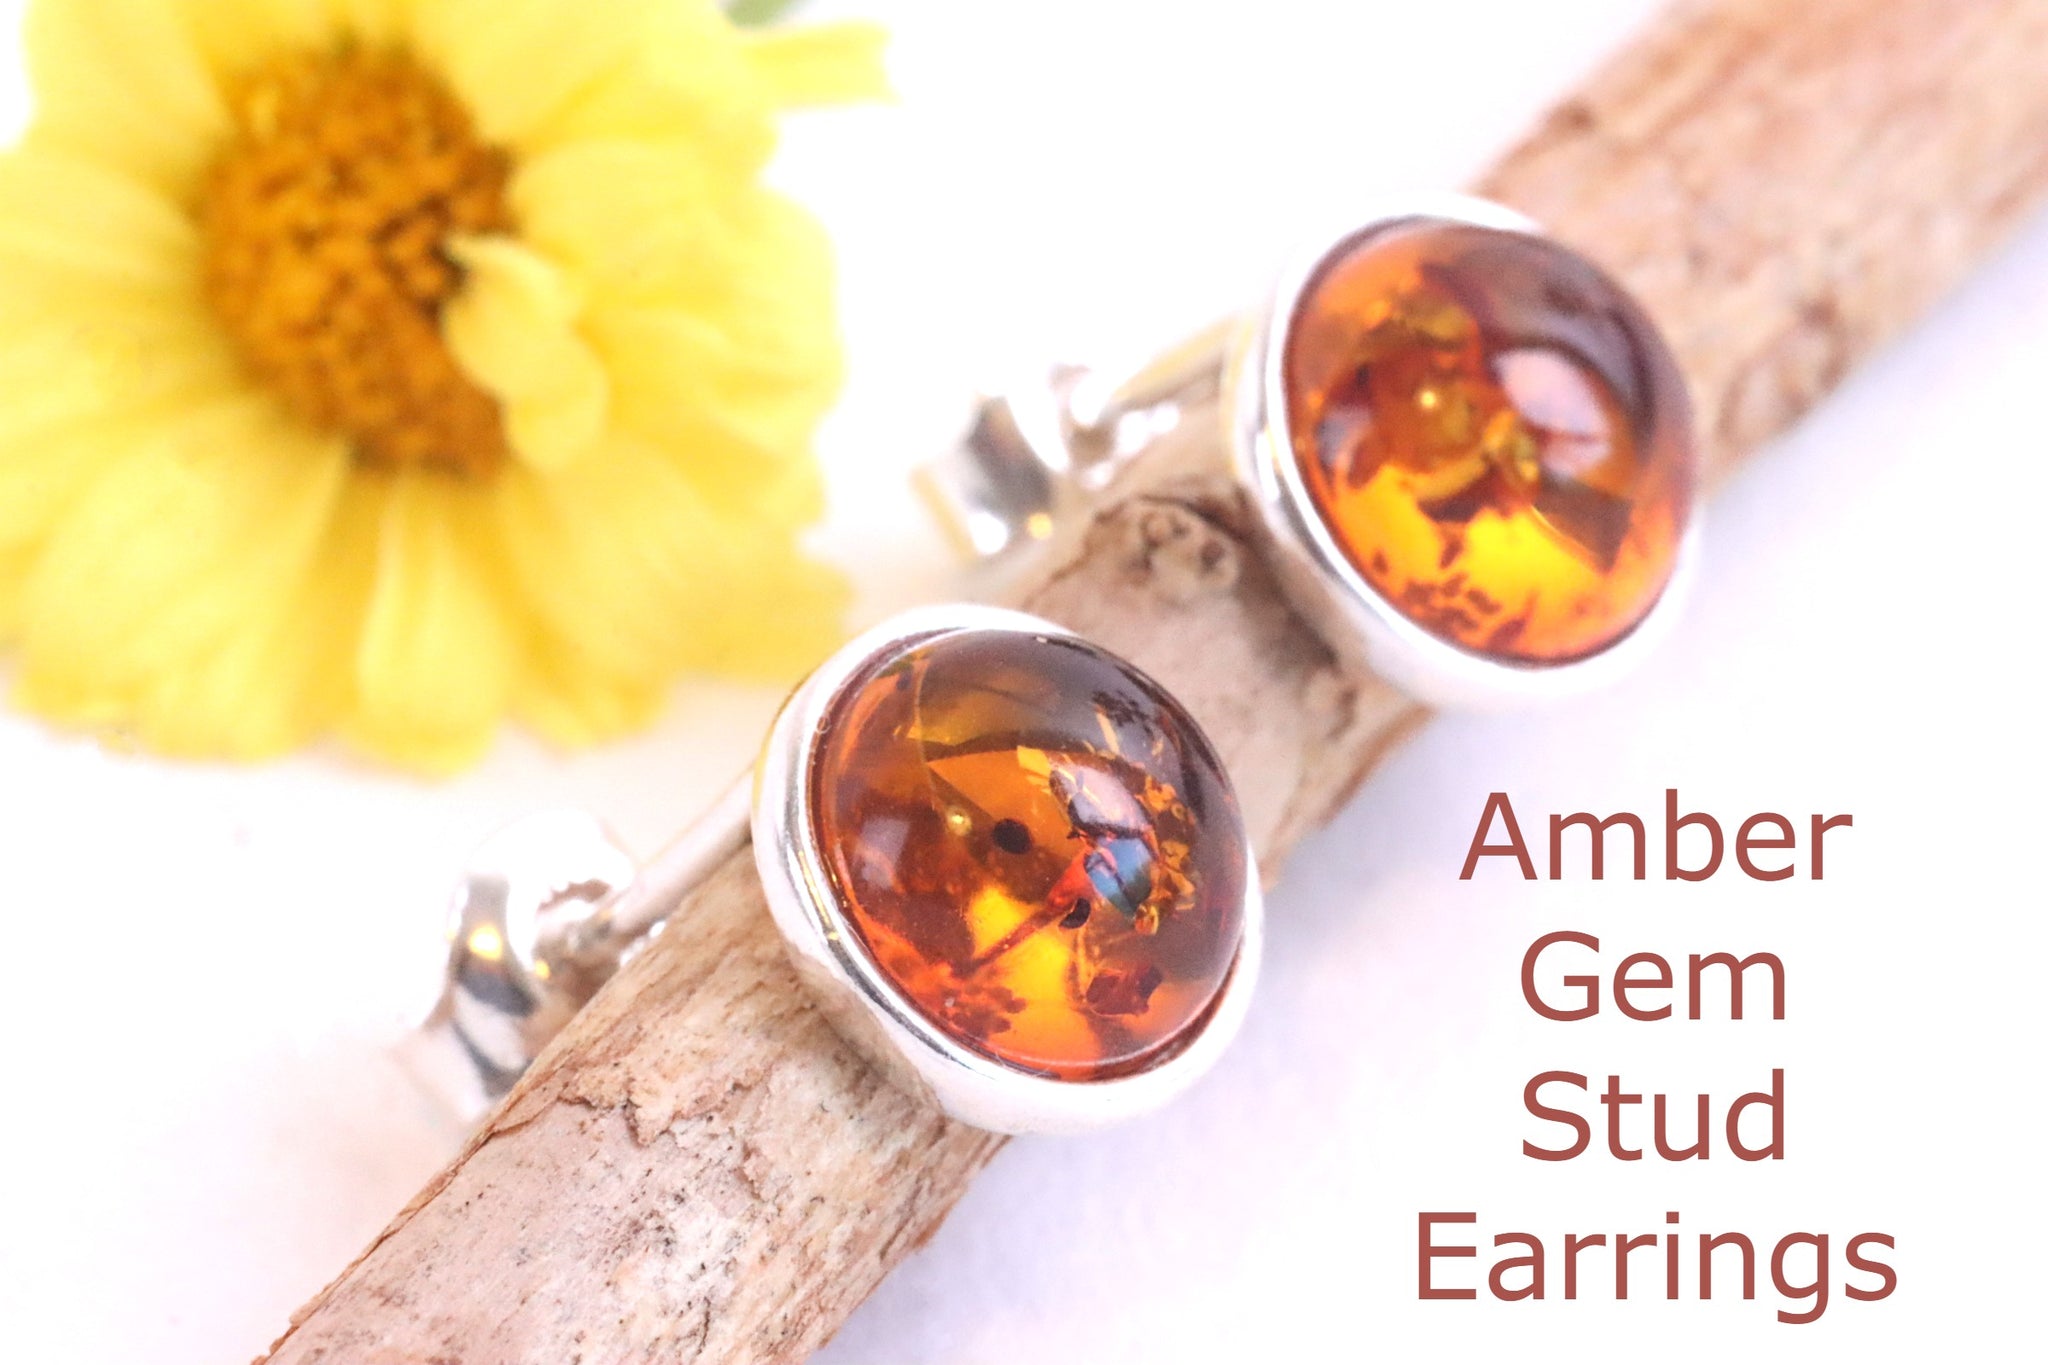 Honey Amber Stud Earrings 925 Sterling Silver